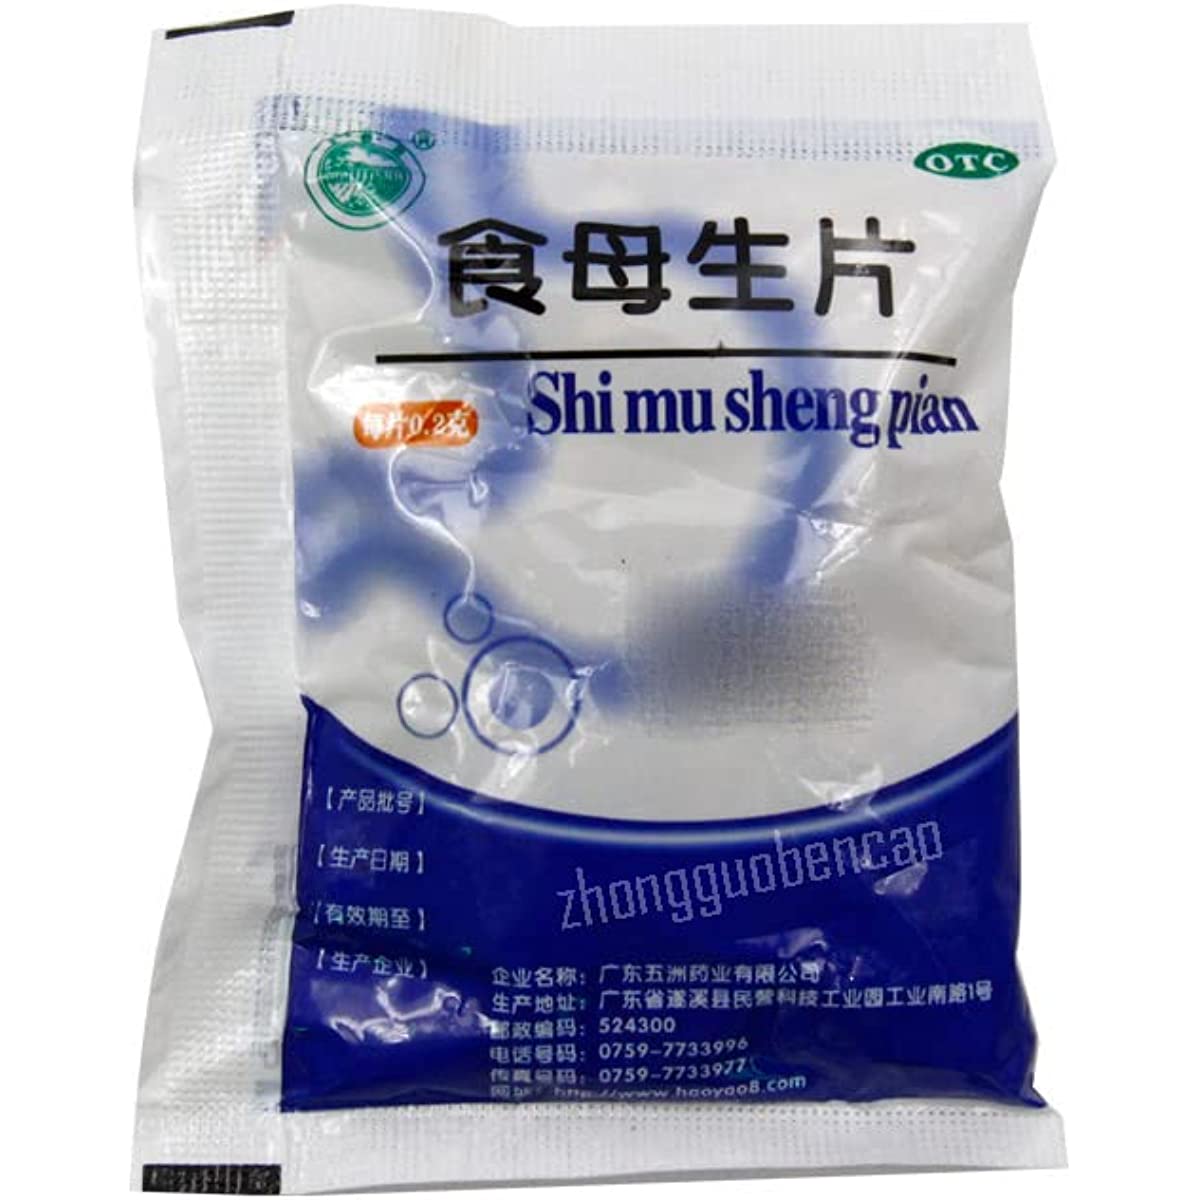 1 Box, Shimusheng Pian 80 Tablets / Bag 食母生片